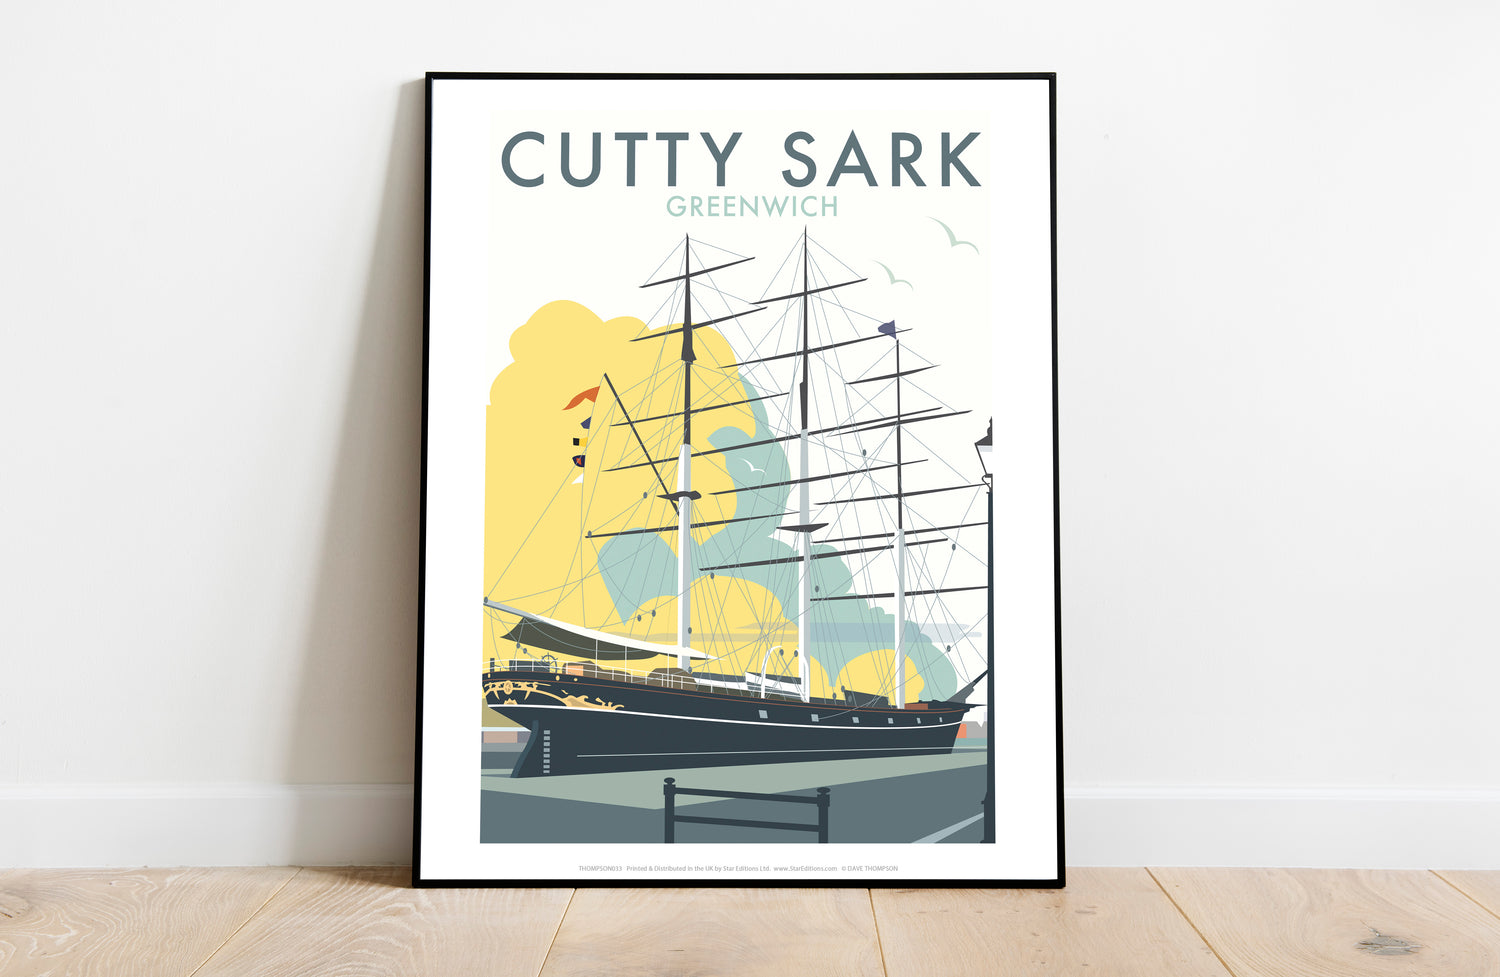 The Cutty Sark, Greenwich, London - Art Print